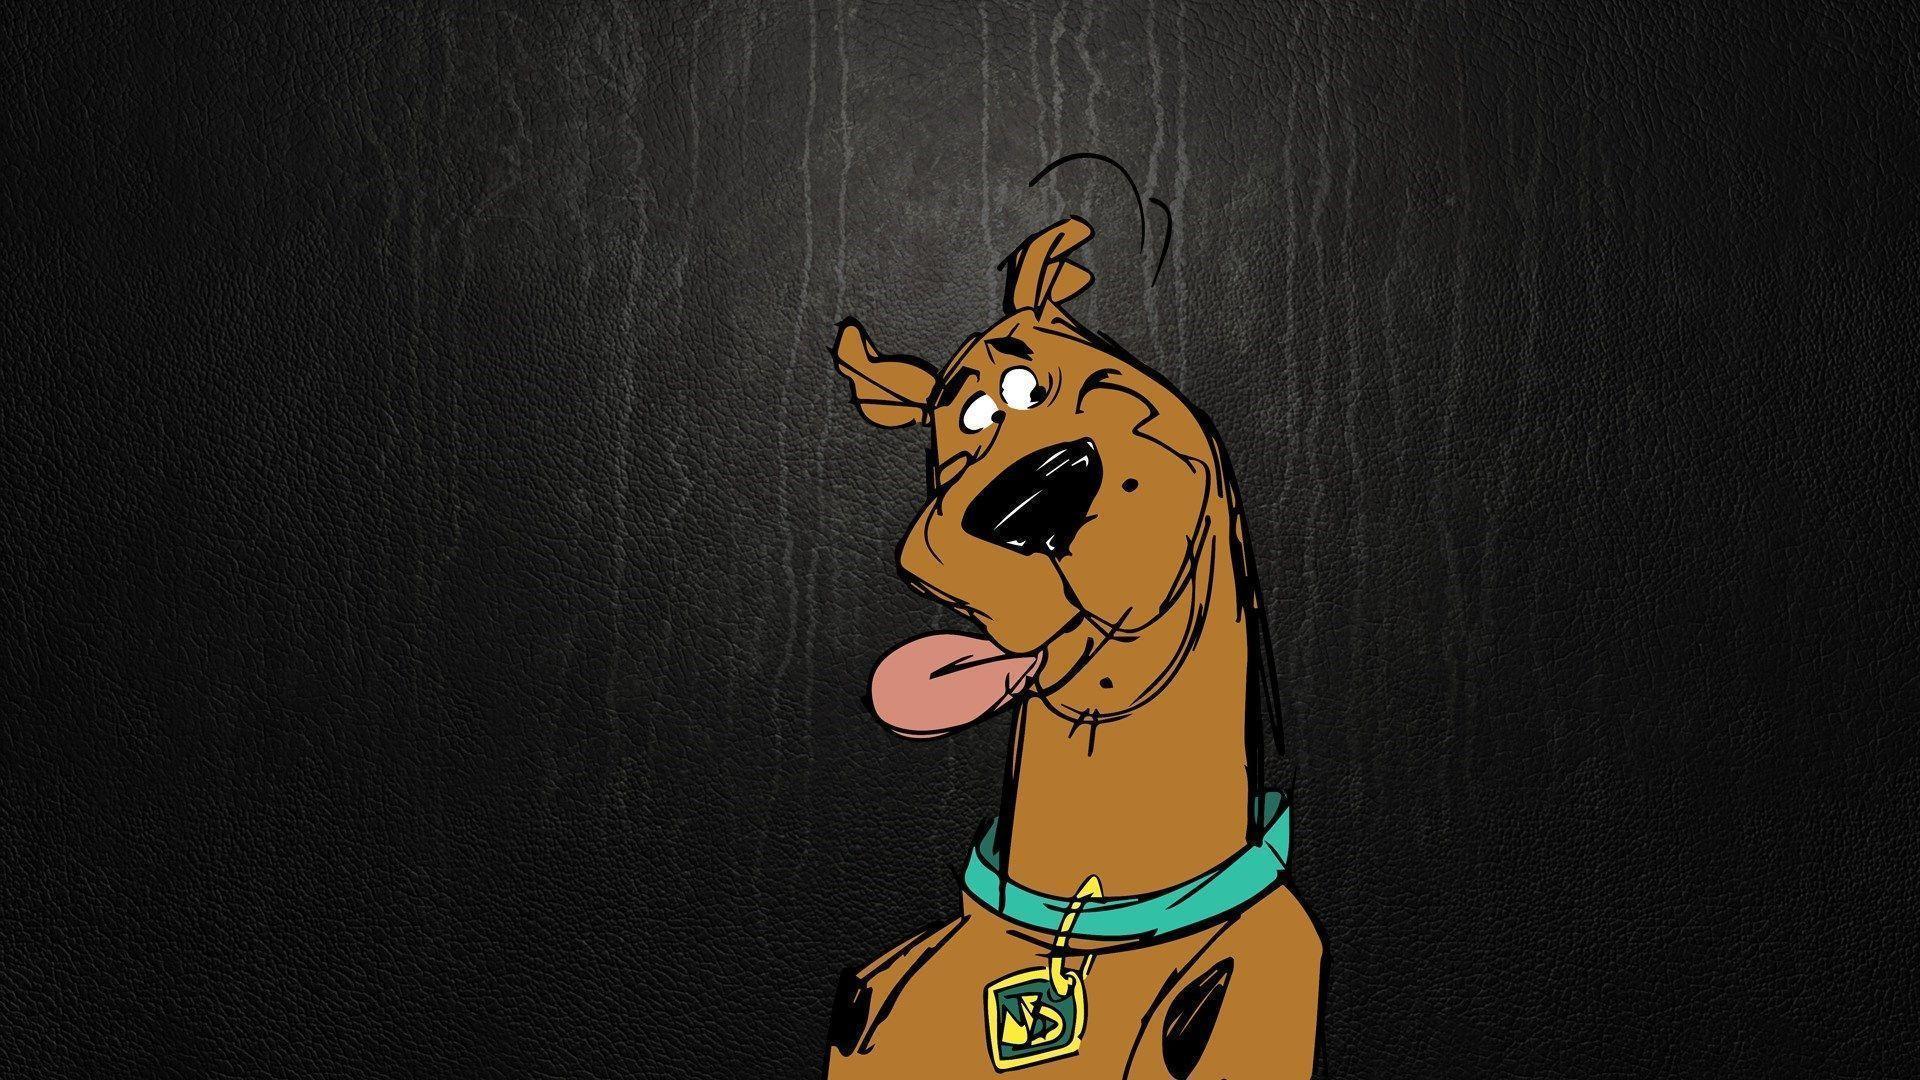 Cute Scooby Doo Image HD Free Download Wallpaper